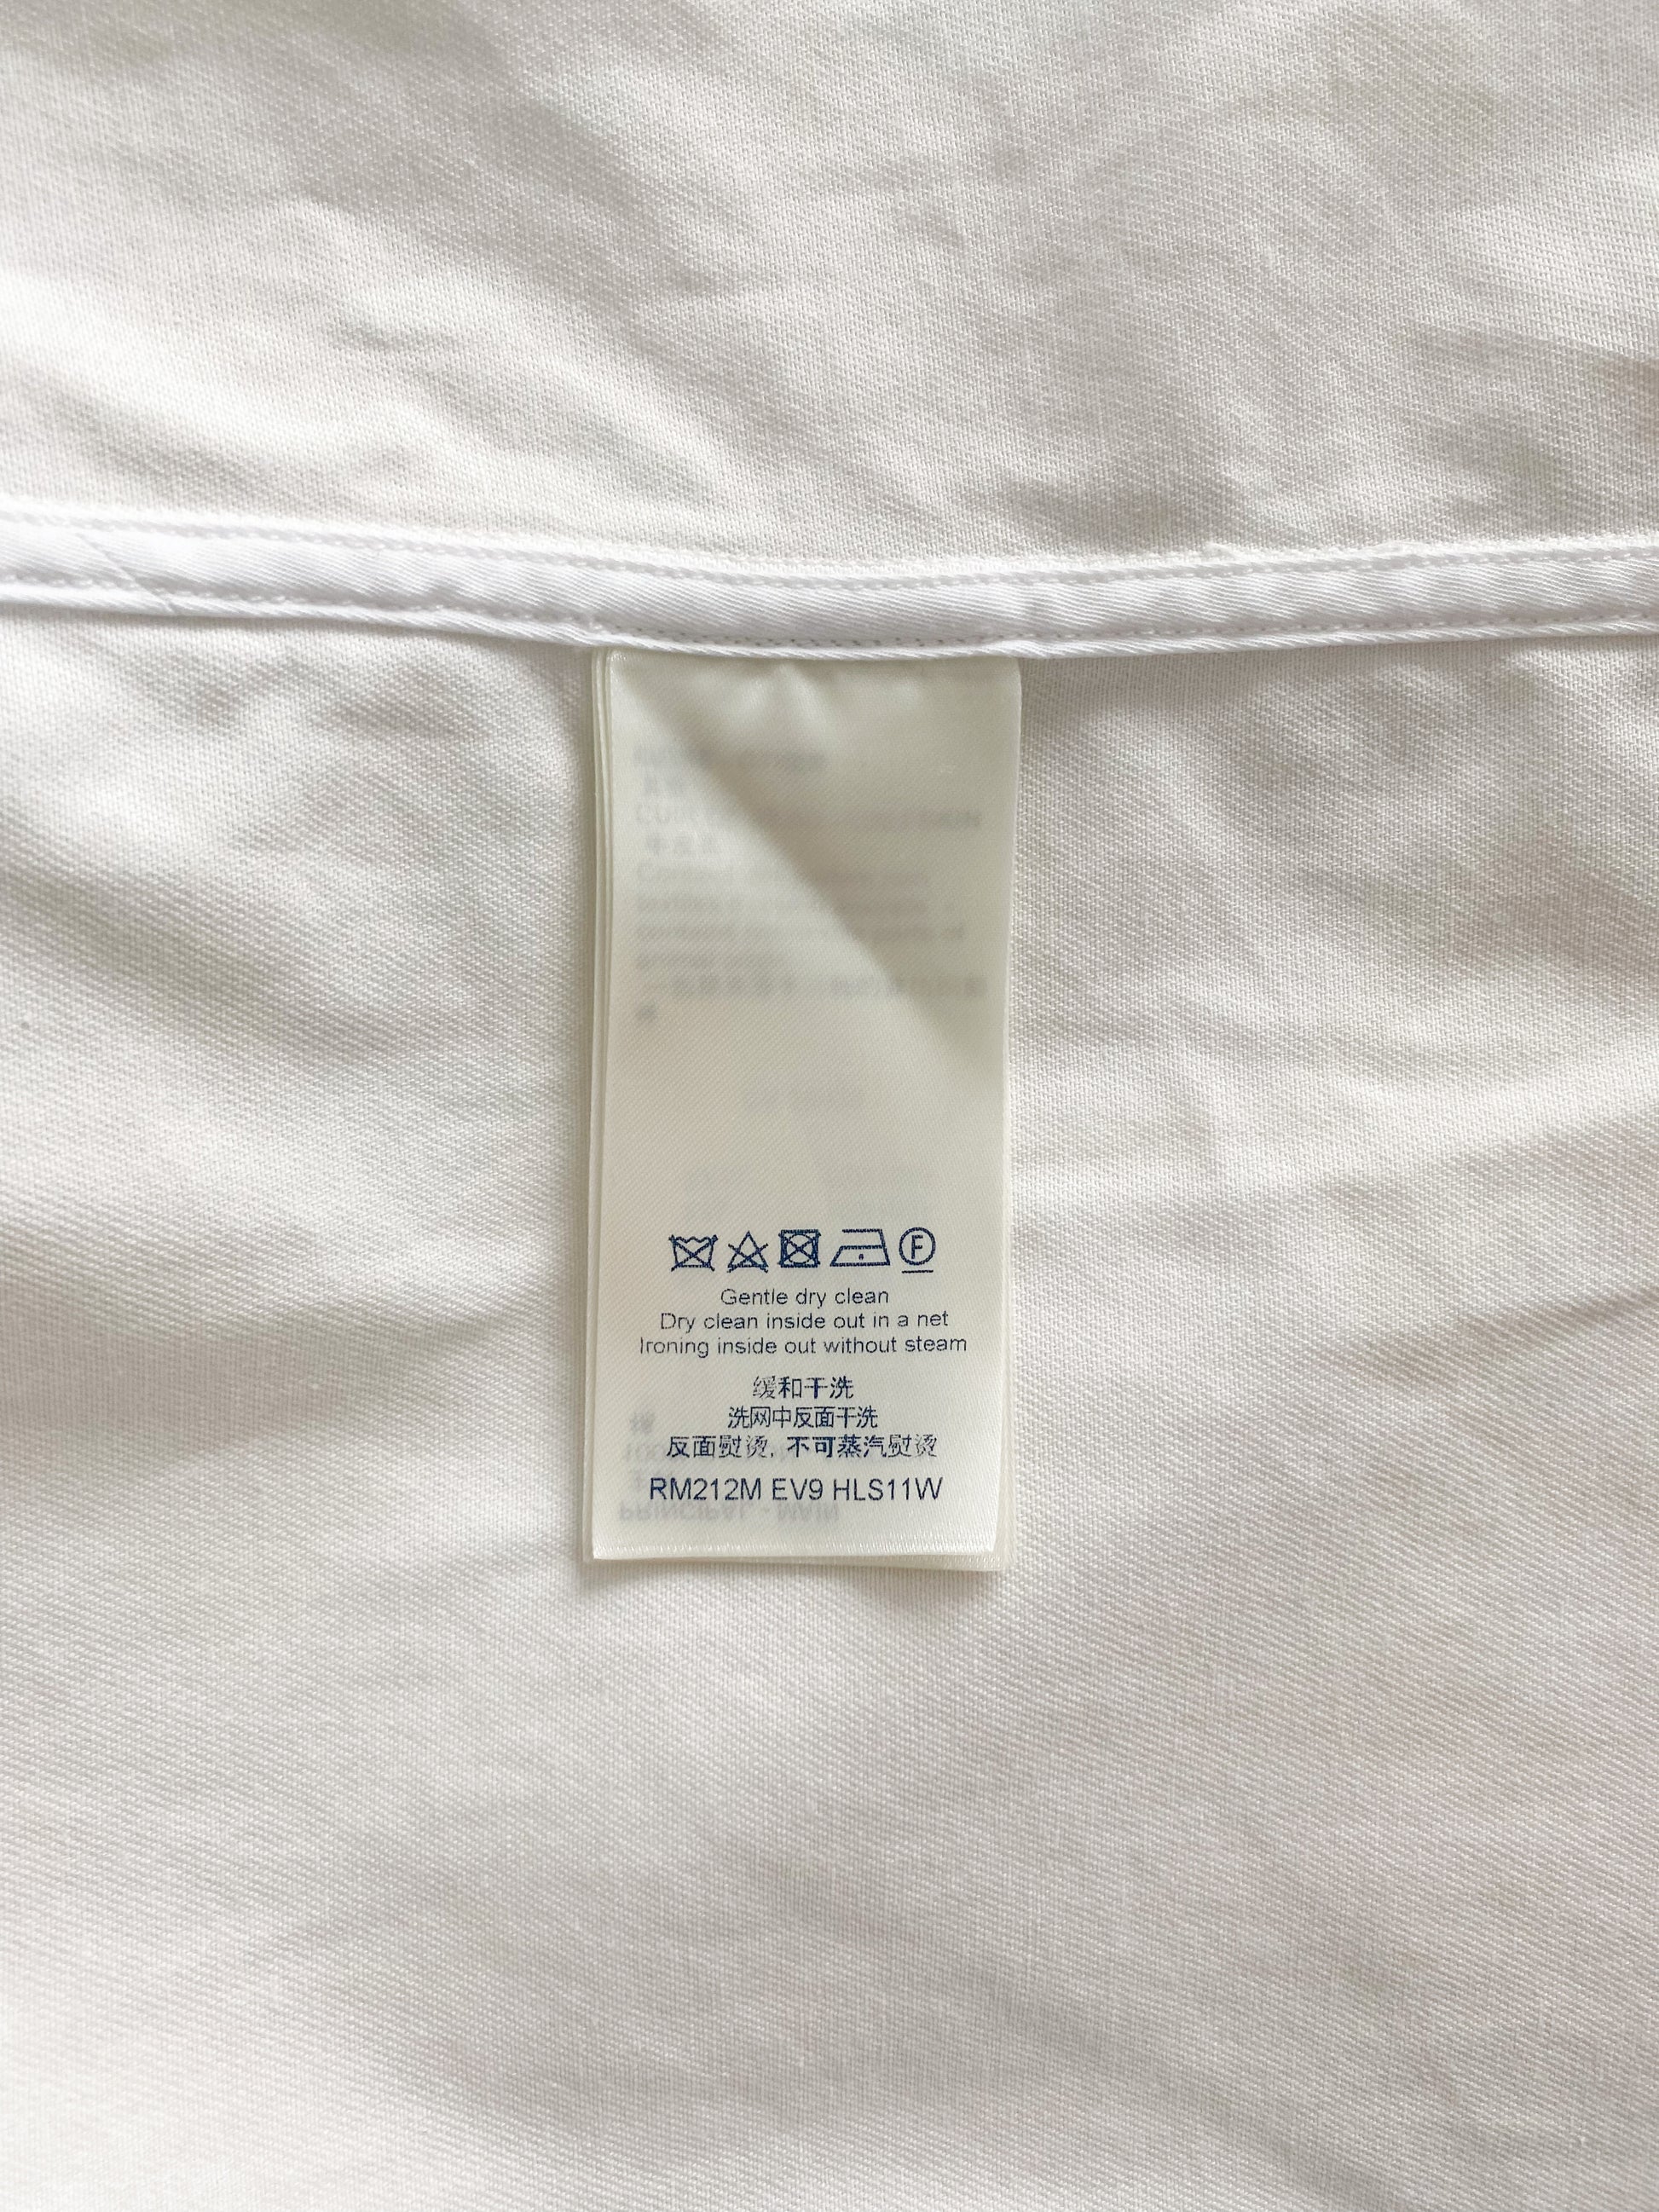 Louis Vuitton White Cotton NBA Short Sleeve T-Shirt S